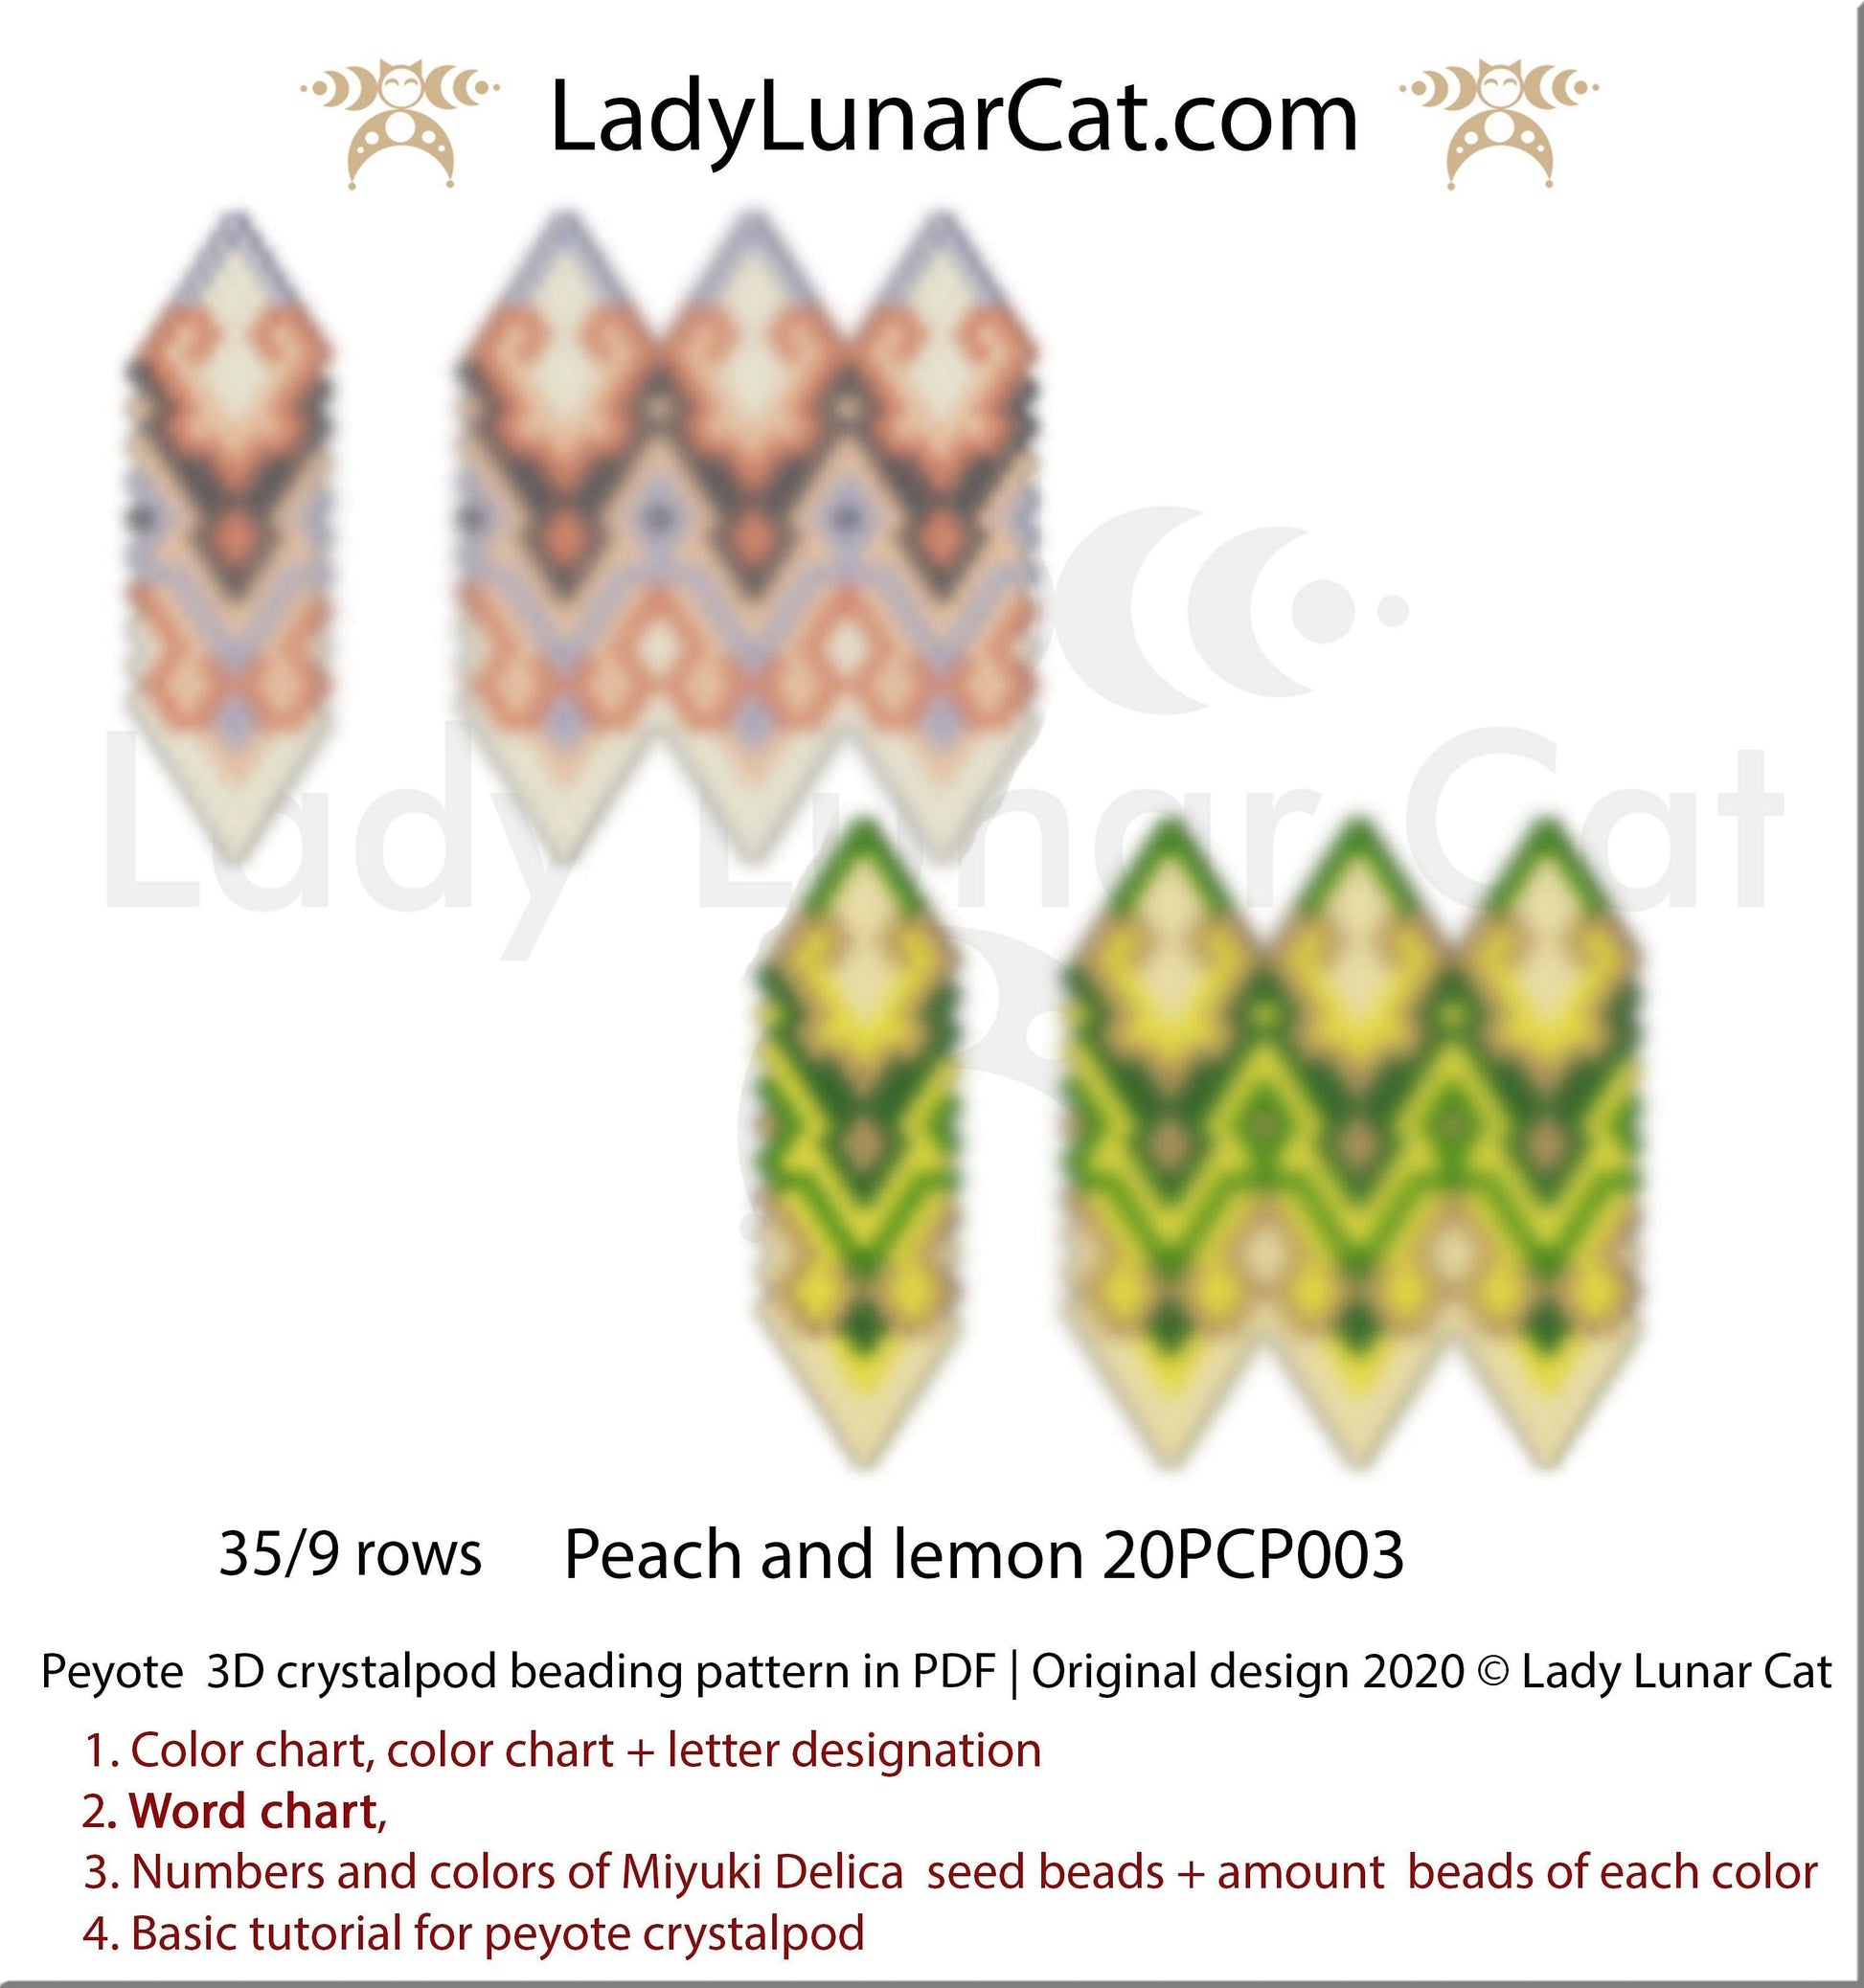 3d peyote pod pattern or crystal pod pattern for beading Peach and lemon 20PCP003 LadyLunarCat